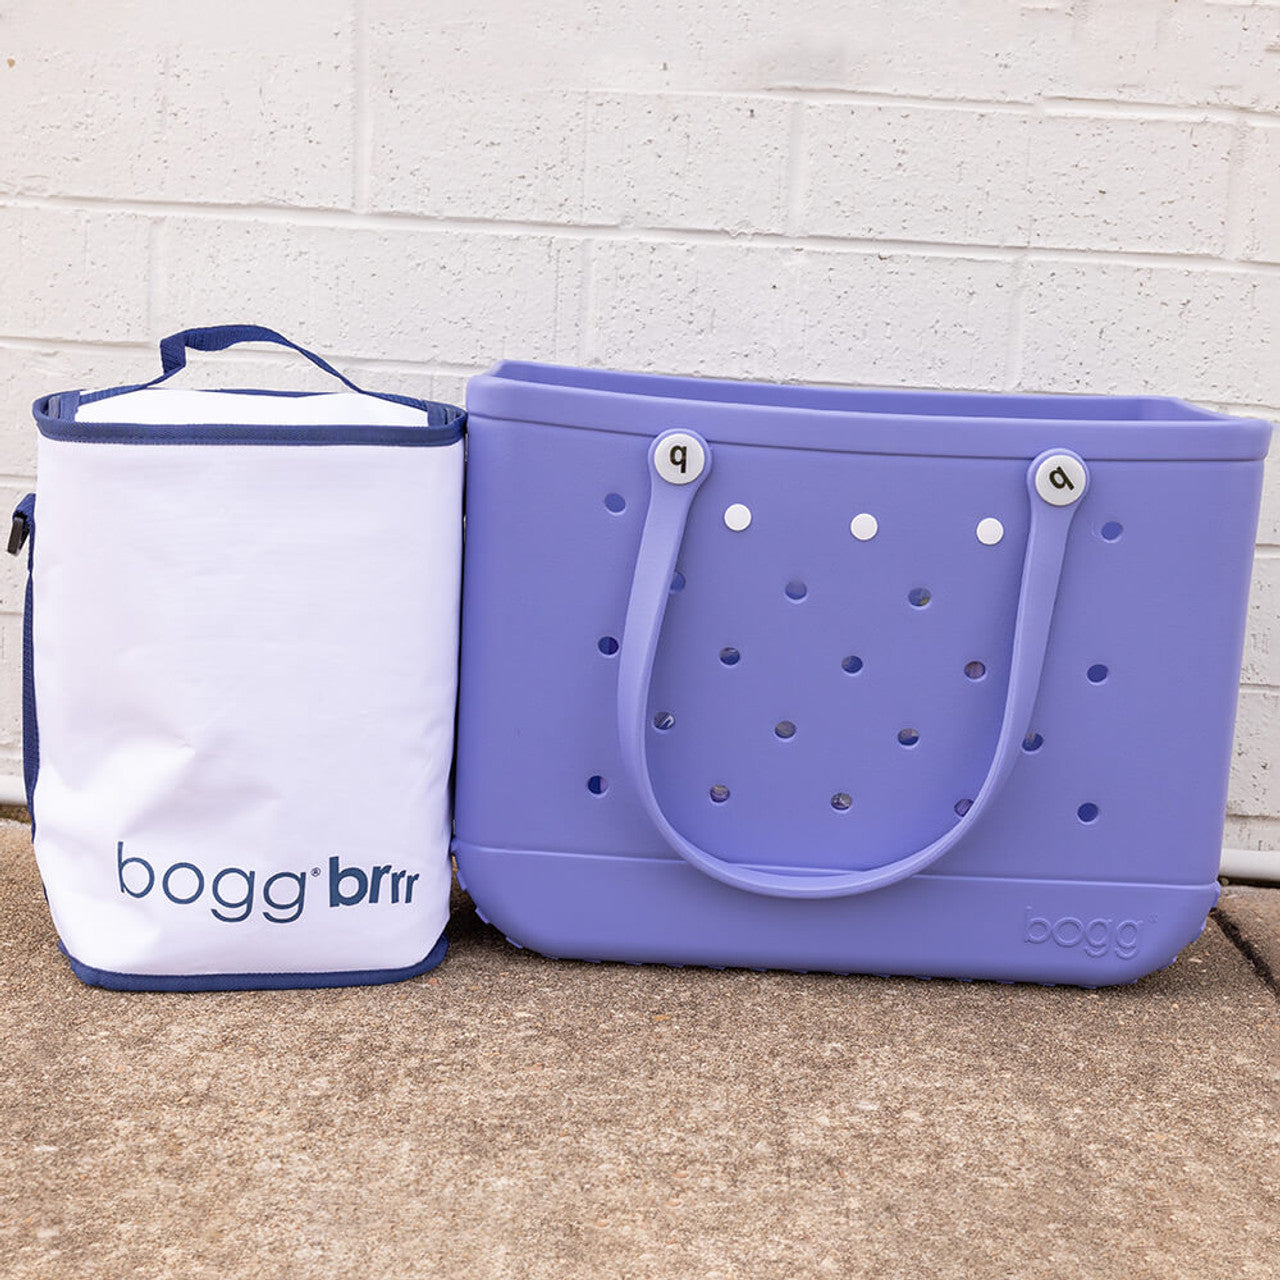 Bogg Bag Cooler Insert: Brr and a Half - White